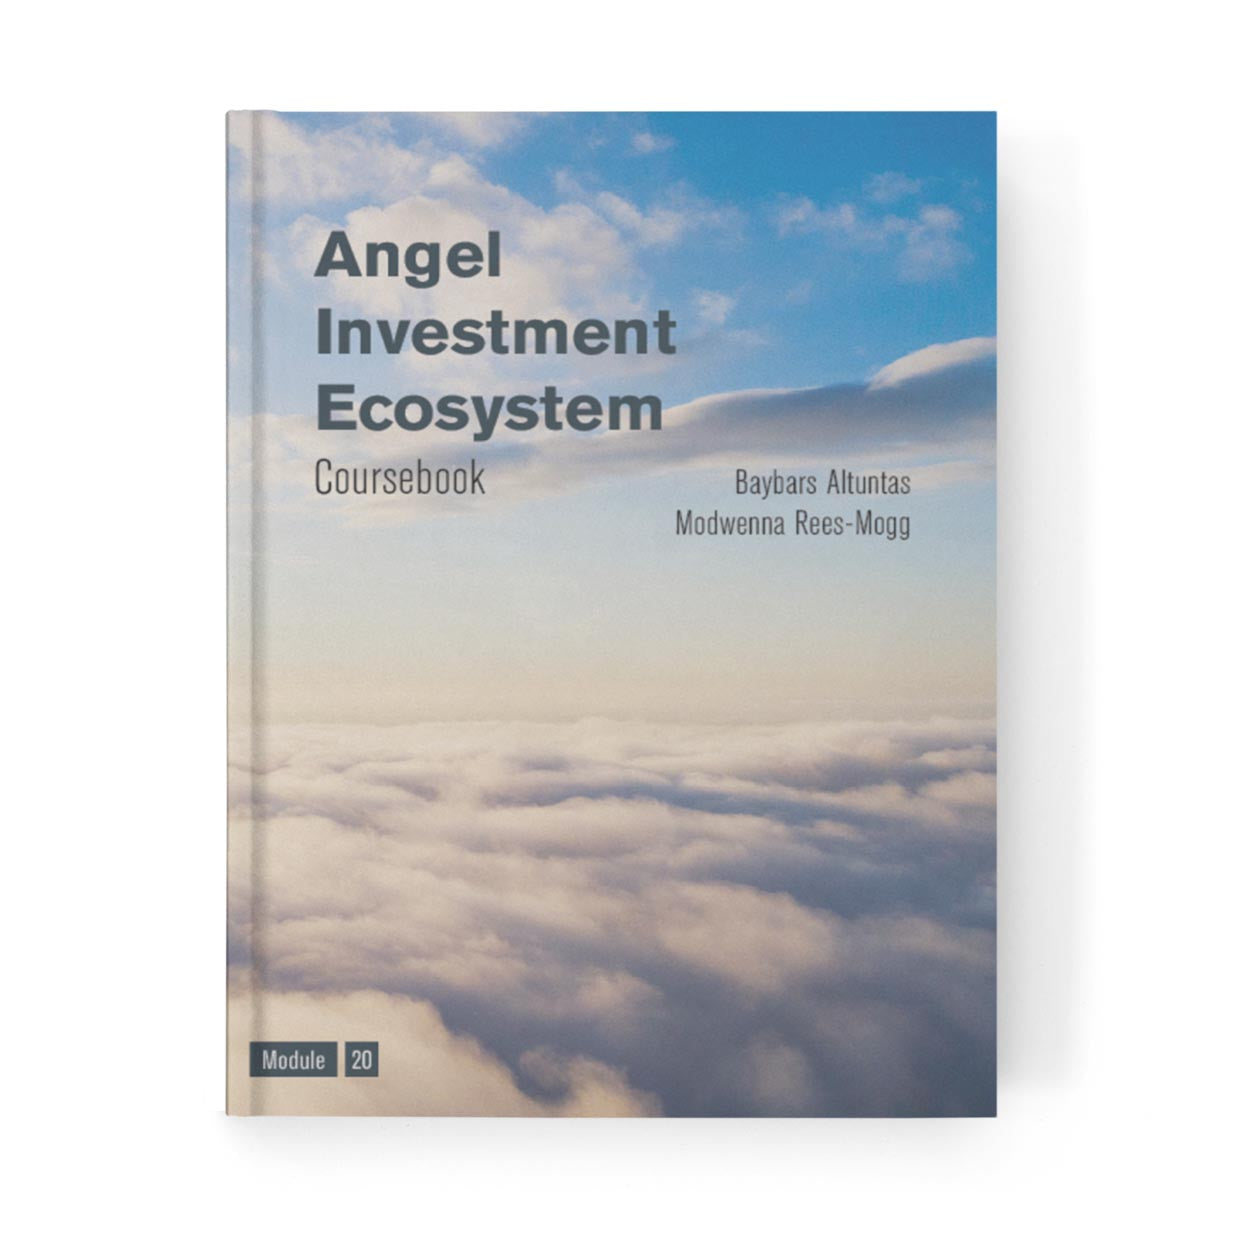 Angel Investment Ecosystem Coursebook